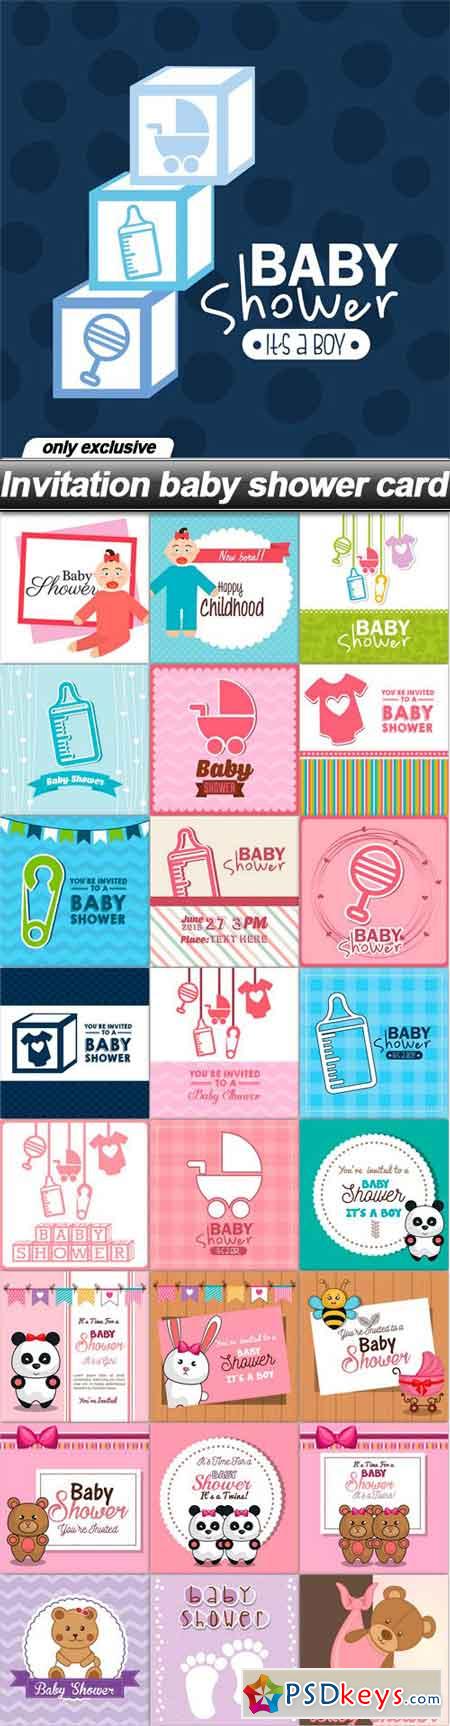 Invitation baby shower card - 25 EPS